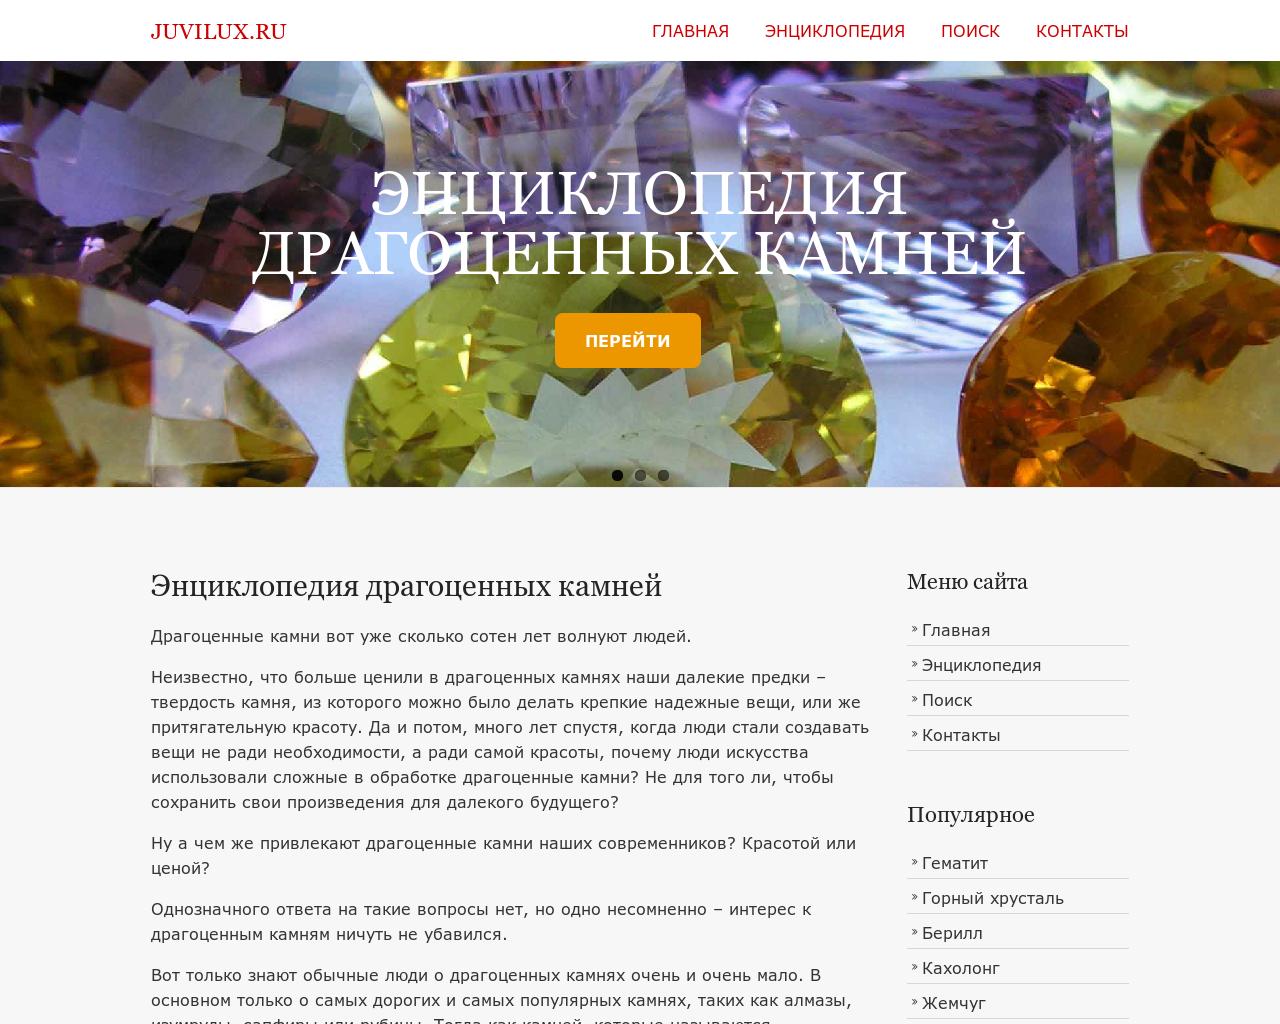 Изображение сайта juvilux.ru в разрешении 1280x1024